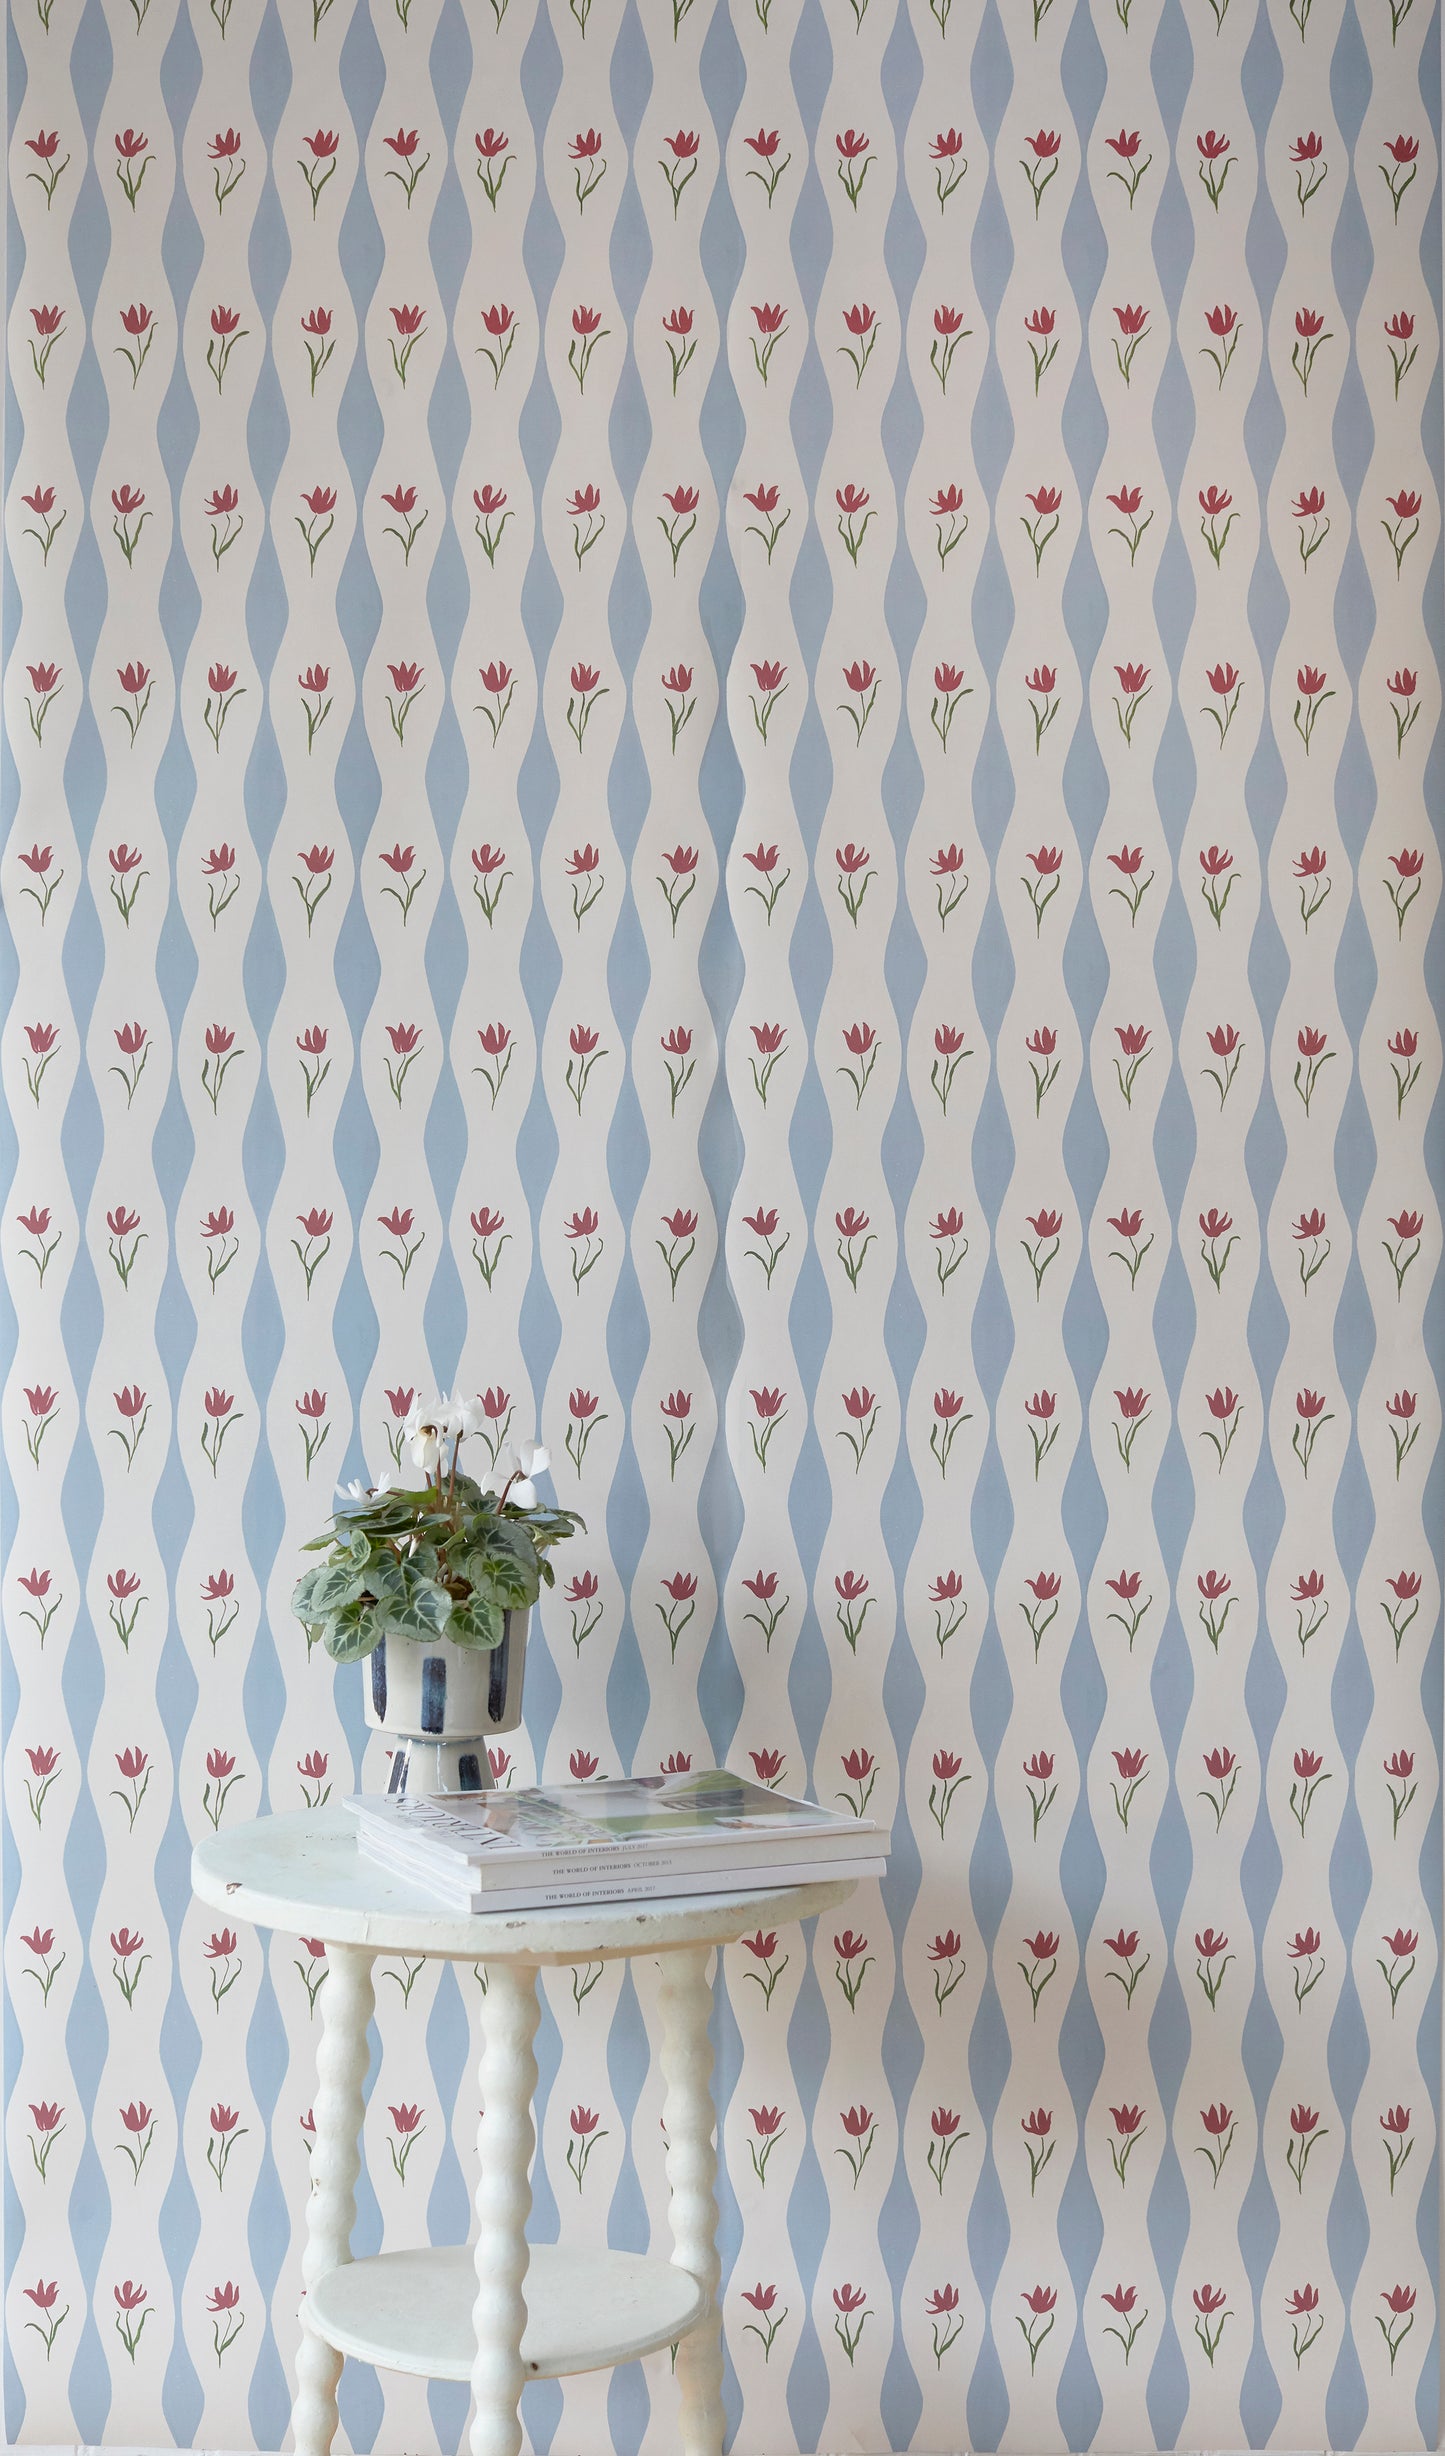 Sophie Harpley, 'Tulip wave' wallpaper (sky)'